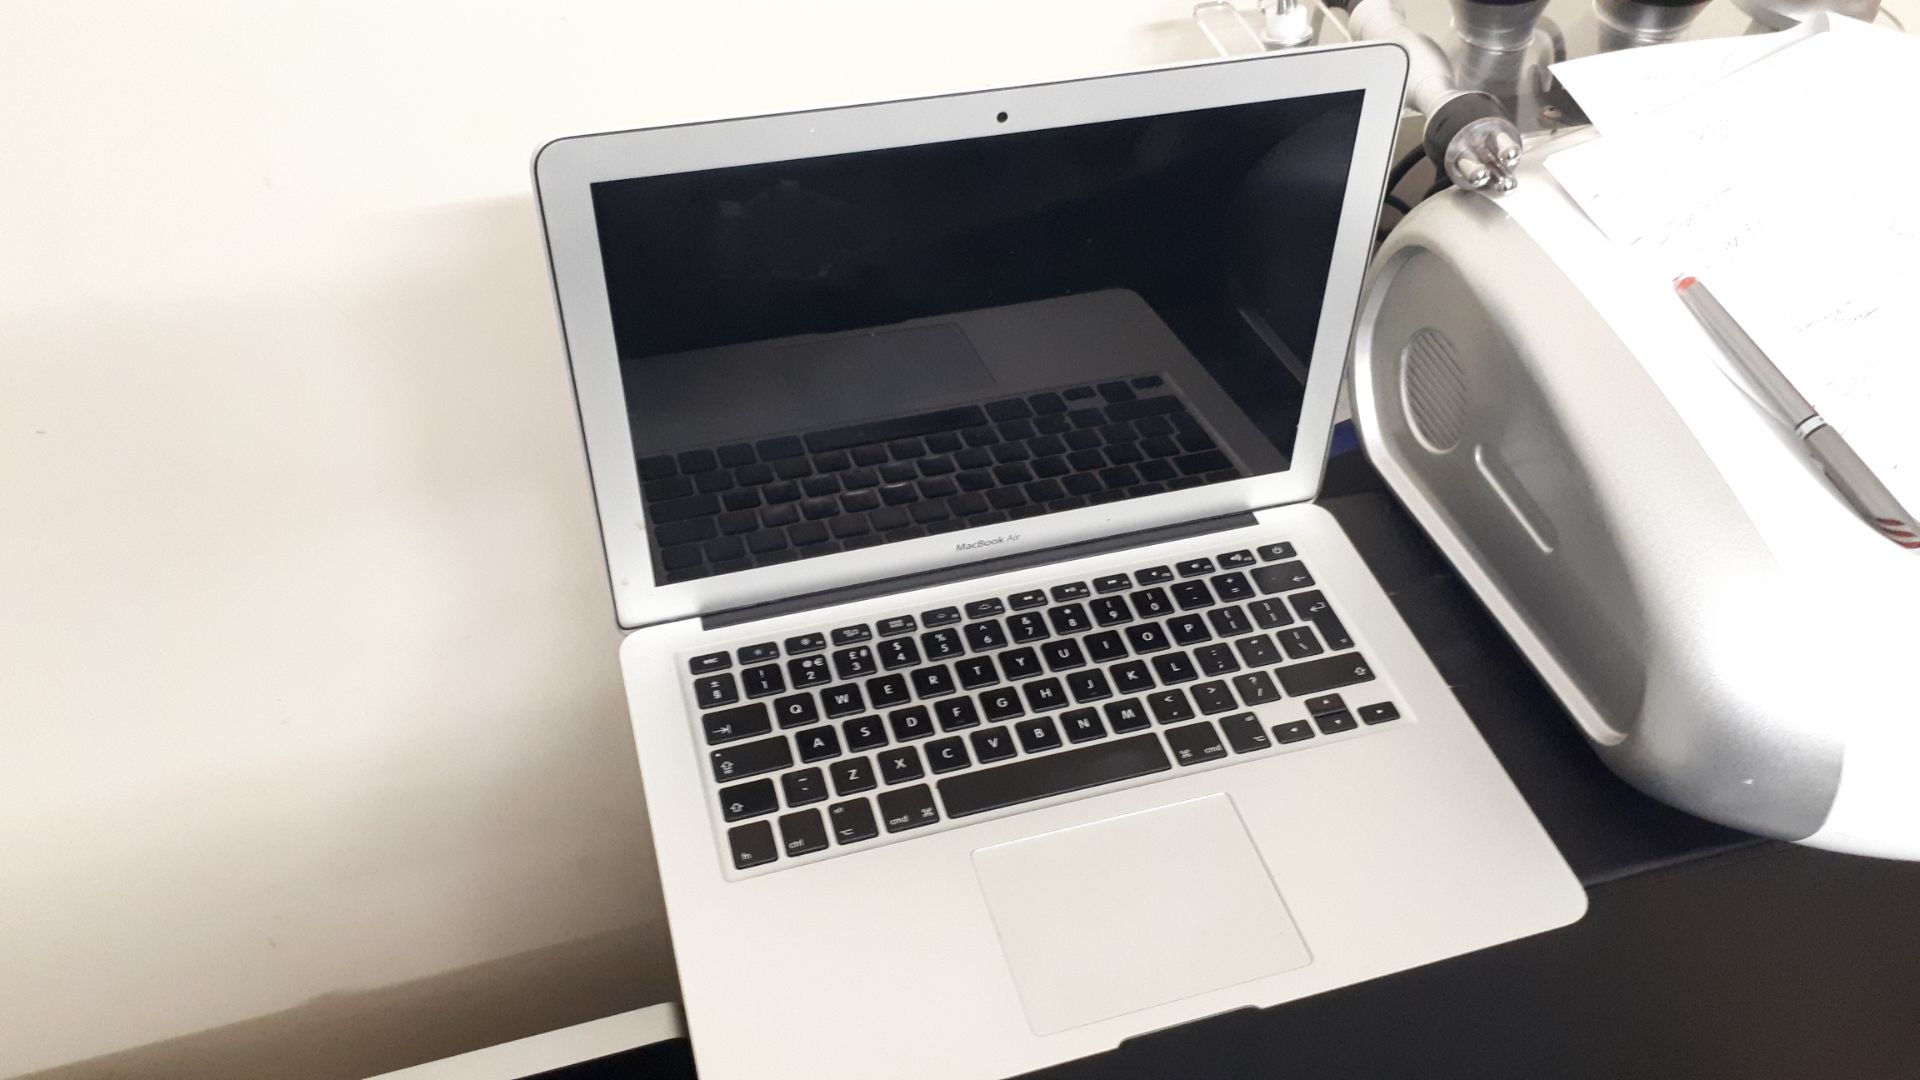 Apple MacBook Air 7,2 13-inch, 1.6GHz Core i5 (2017) 4GB RAM 256GB SDD, Model A1466, S/N - Image 3 of 4